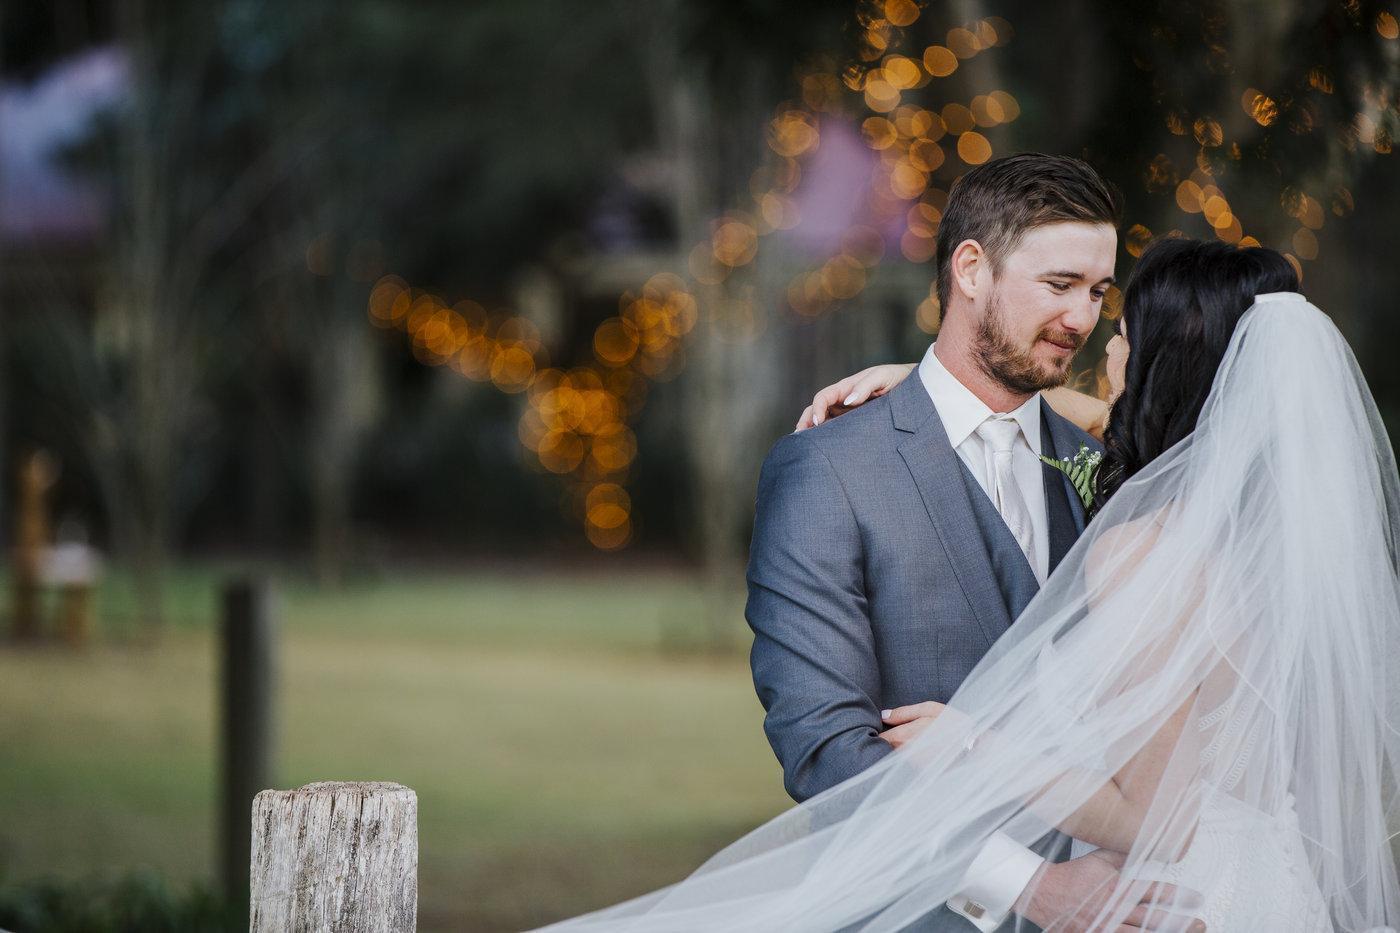 Wedding Photography couple embracing under lights